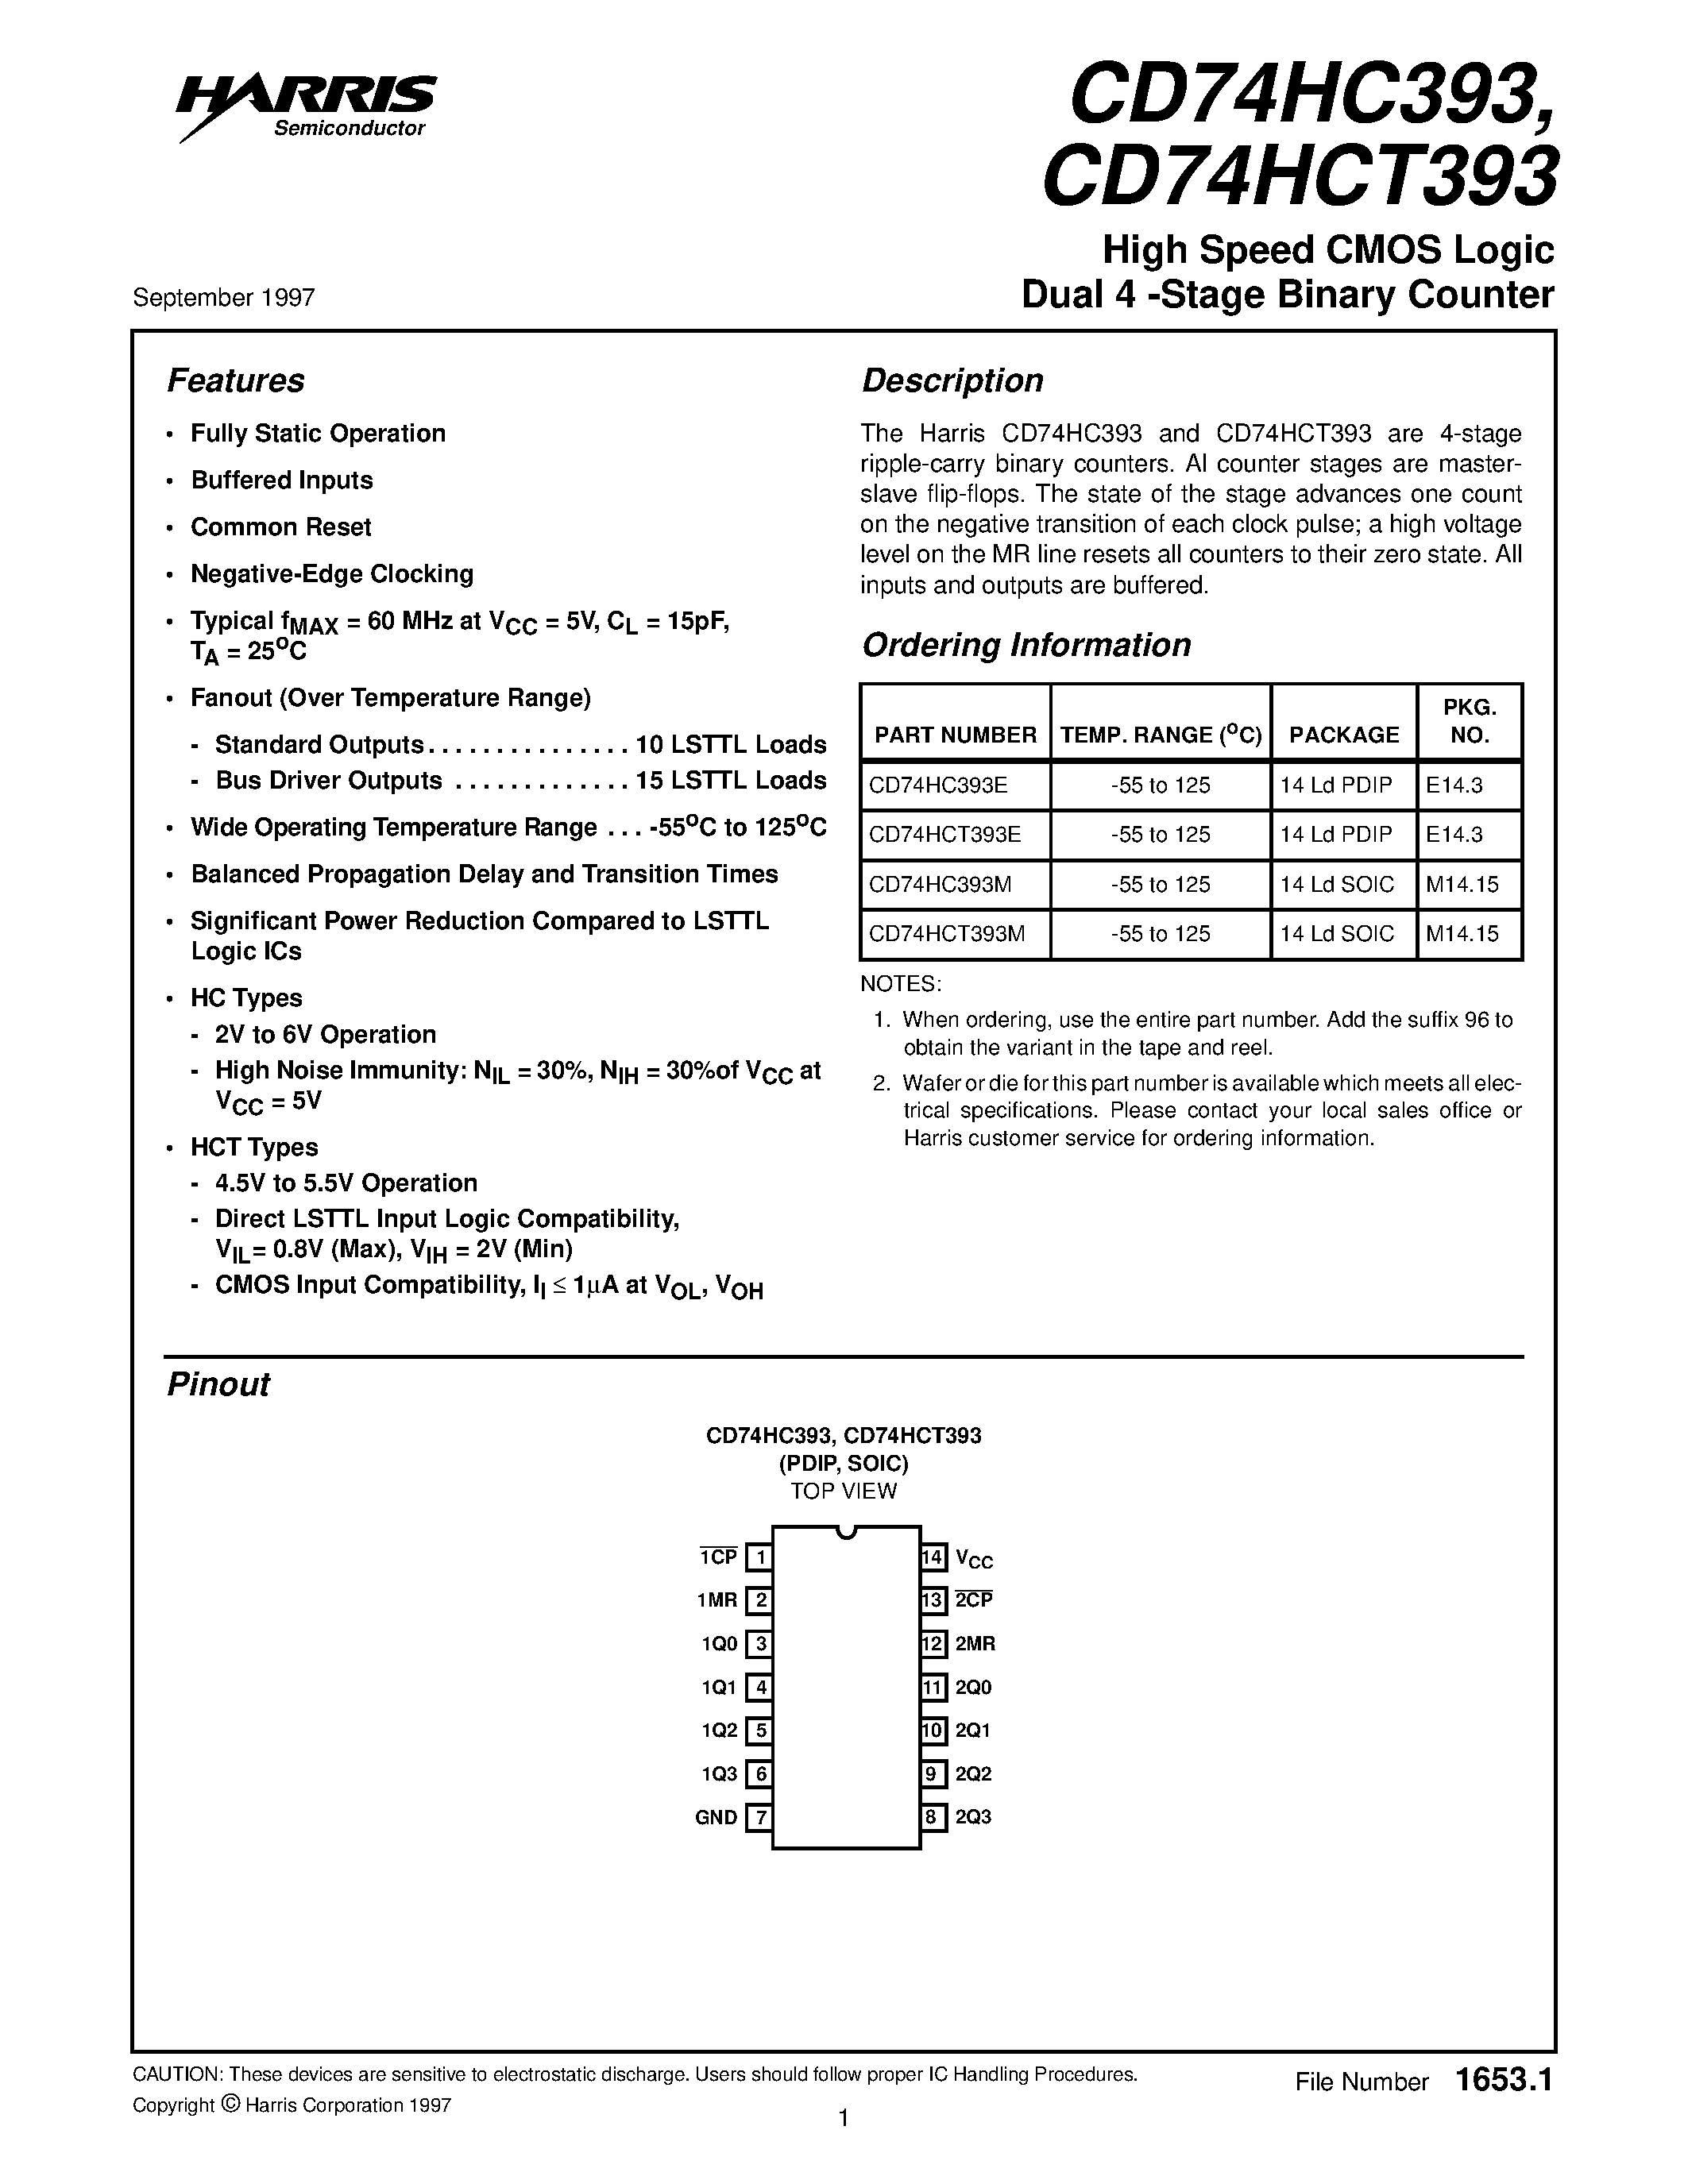 Datasheet 74393 - High Speed CMOS Logic Dual 4 -Stage Binary Counter page 1